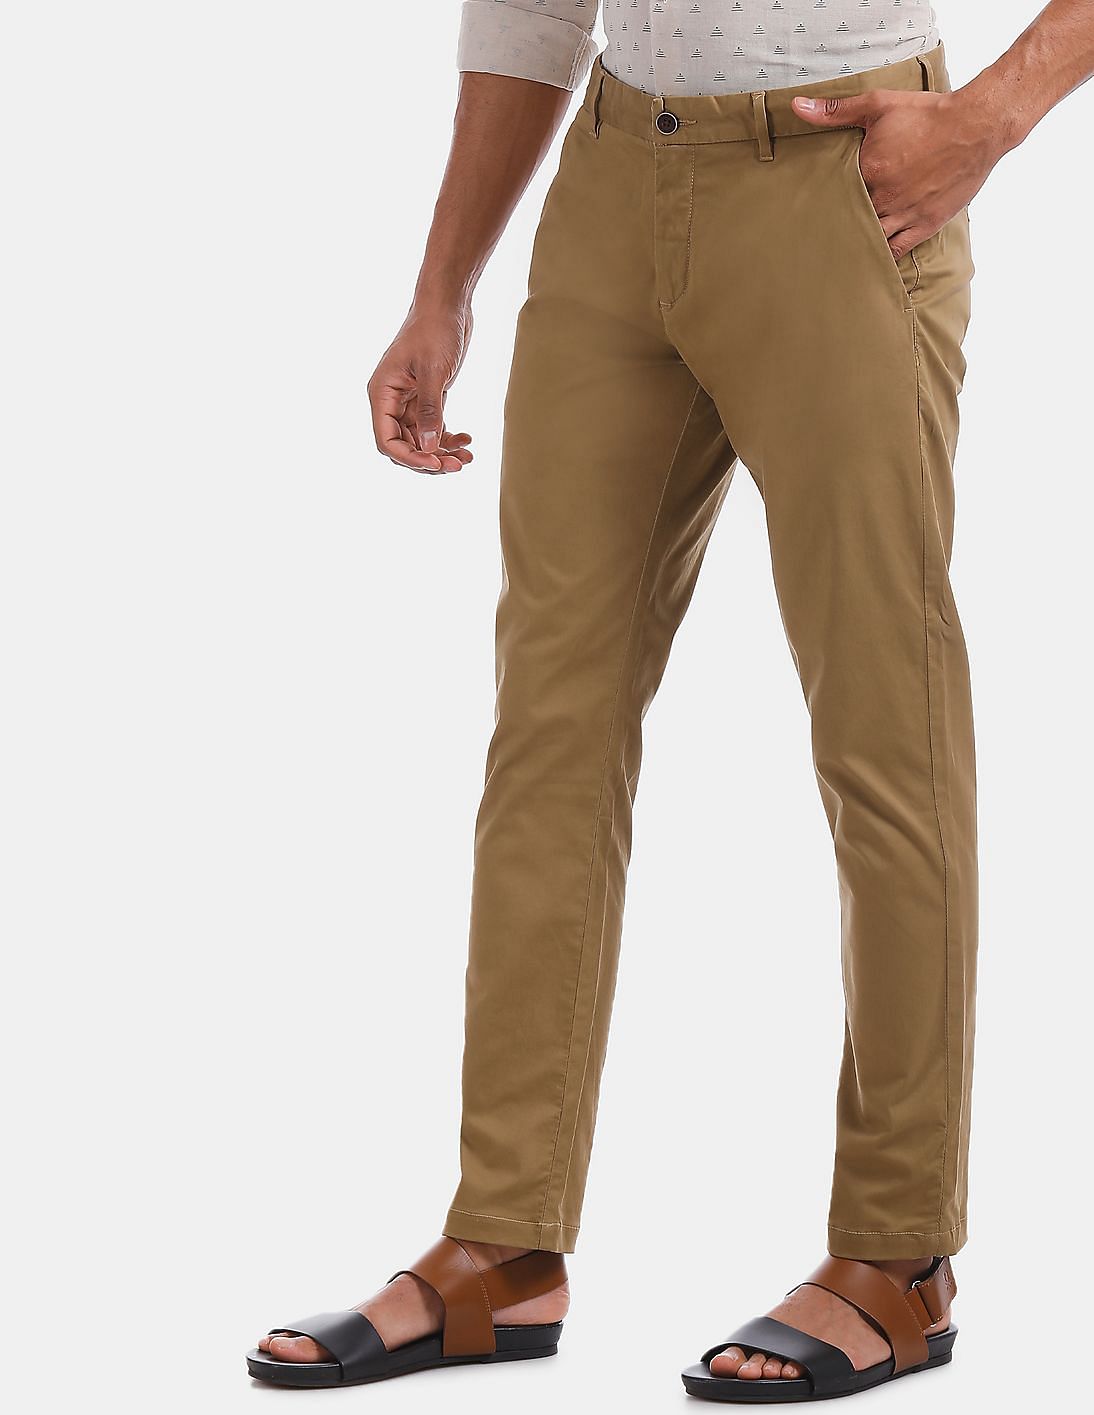 Buy > best men's casual stretch pants > in stock